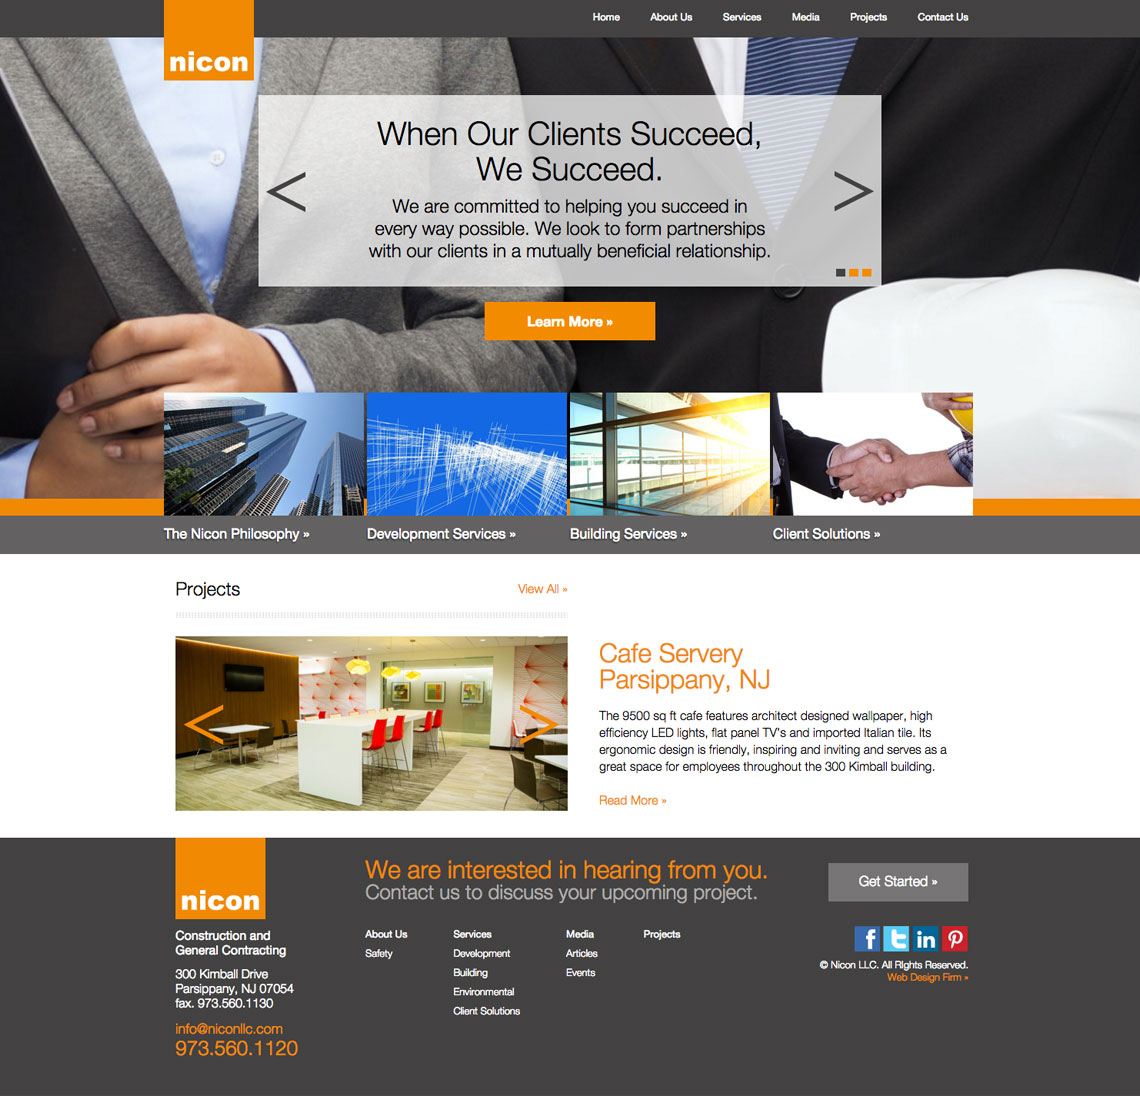 nincon construction company website design